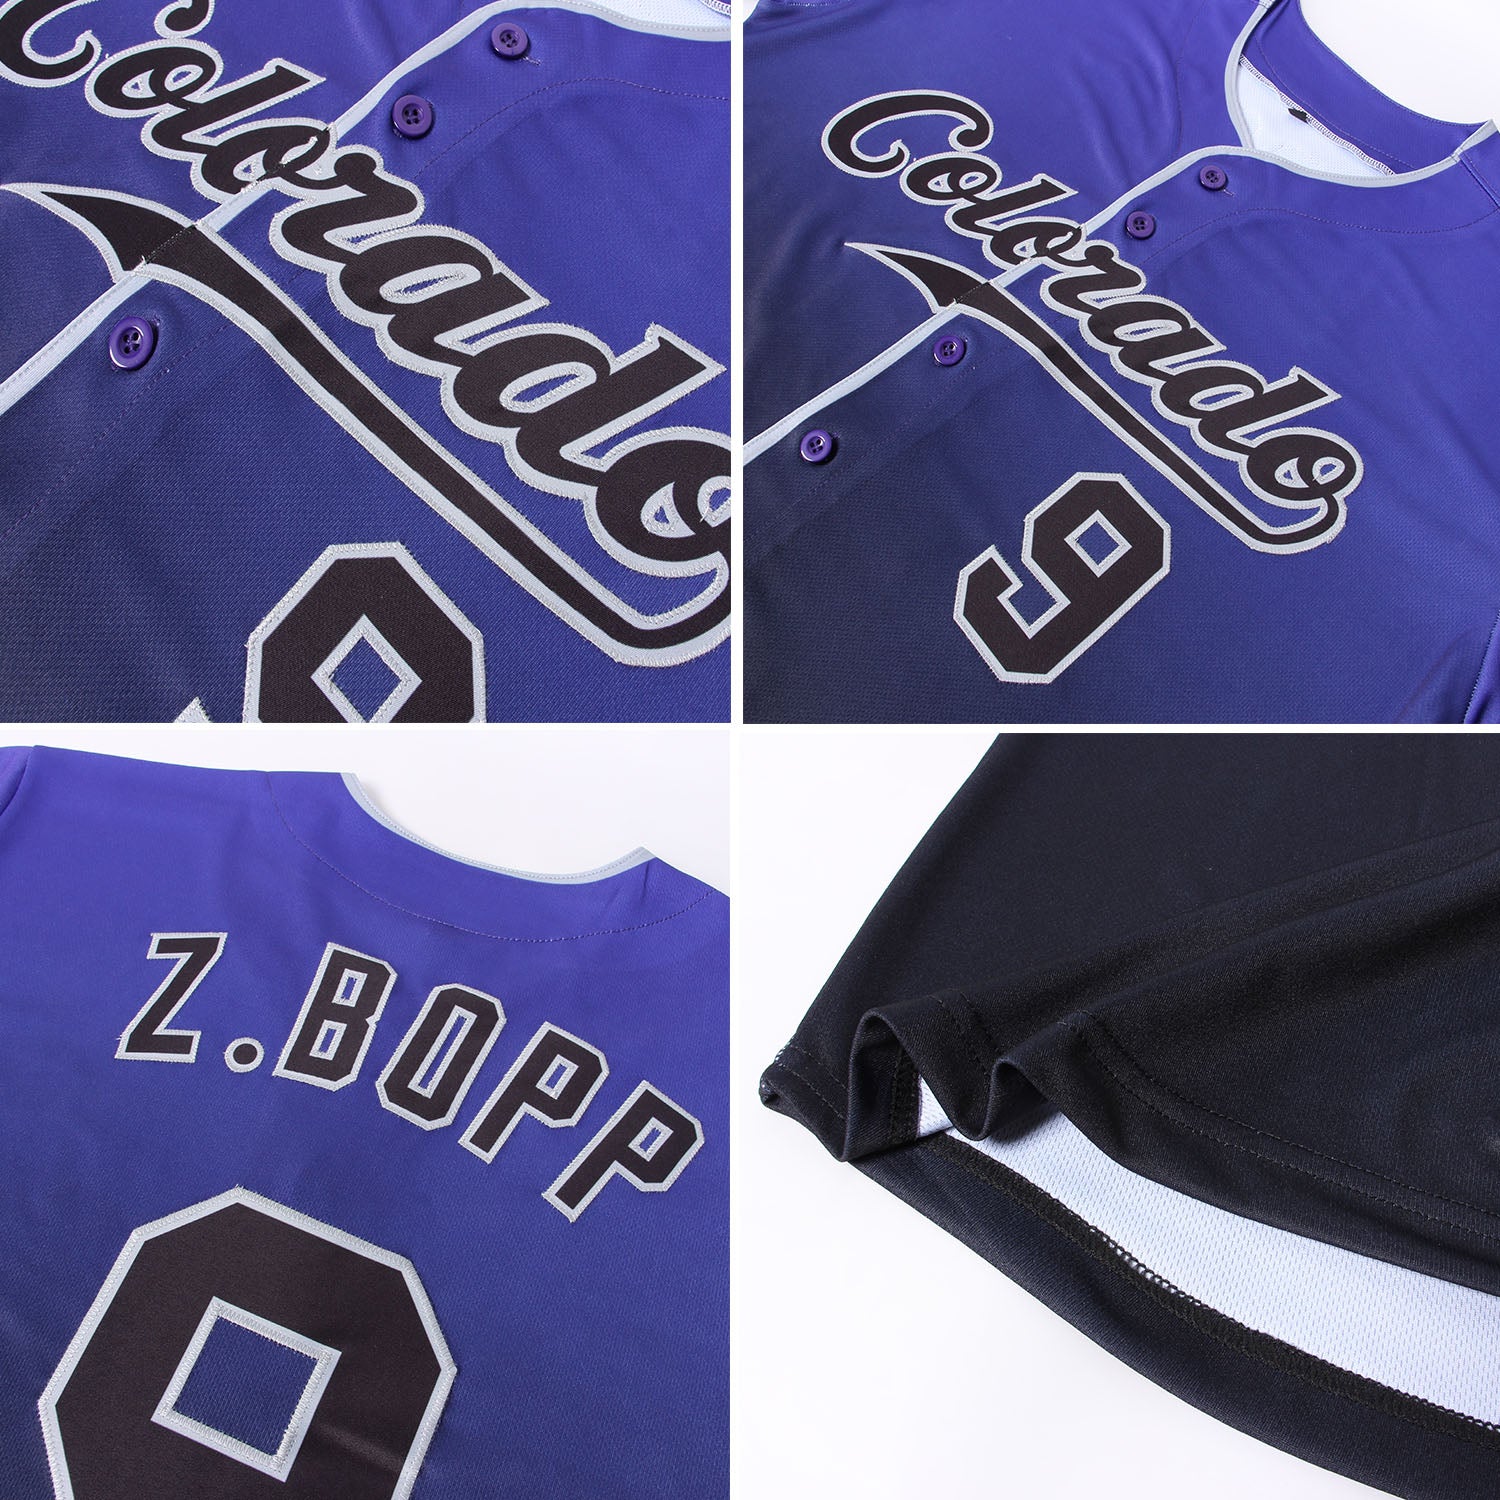 Custom Purple Black-Gray Authentic Fade Fashion Baseball Jersey